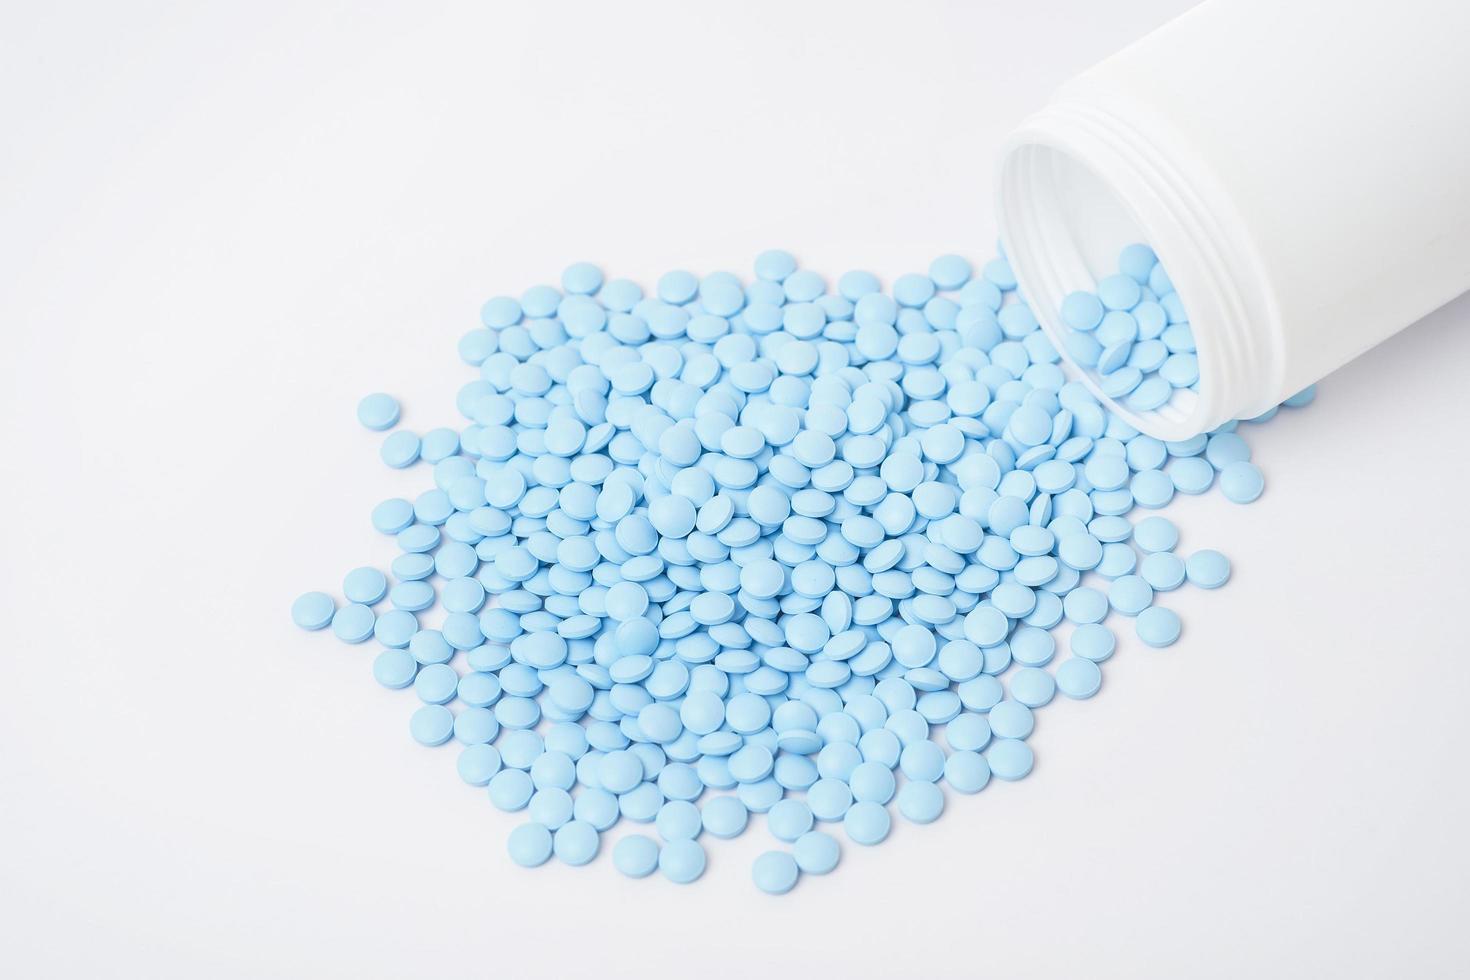 högar av blå piller på vit bakgrund foto